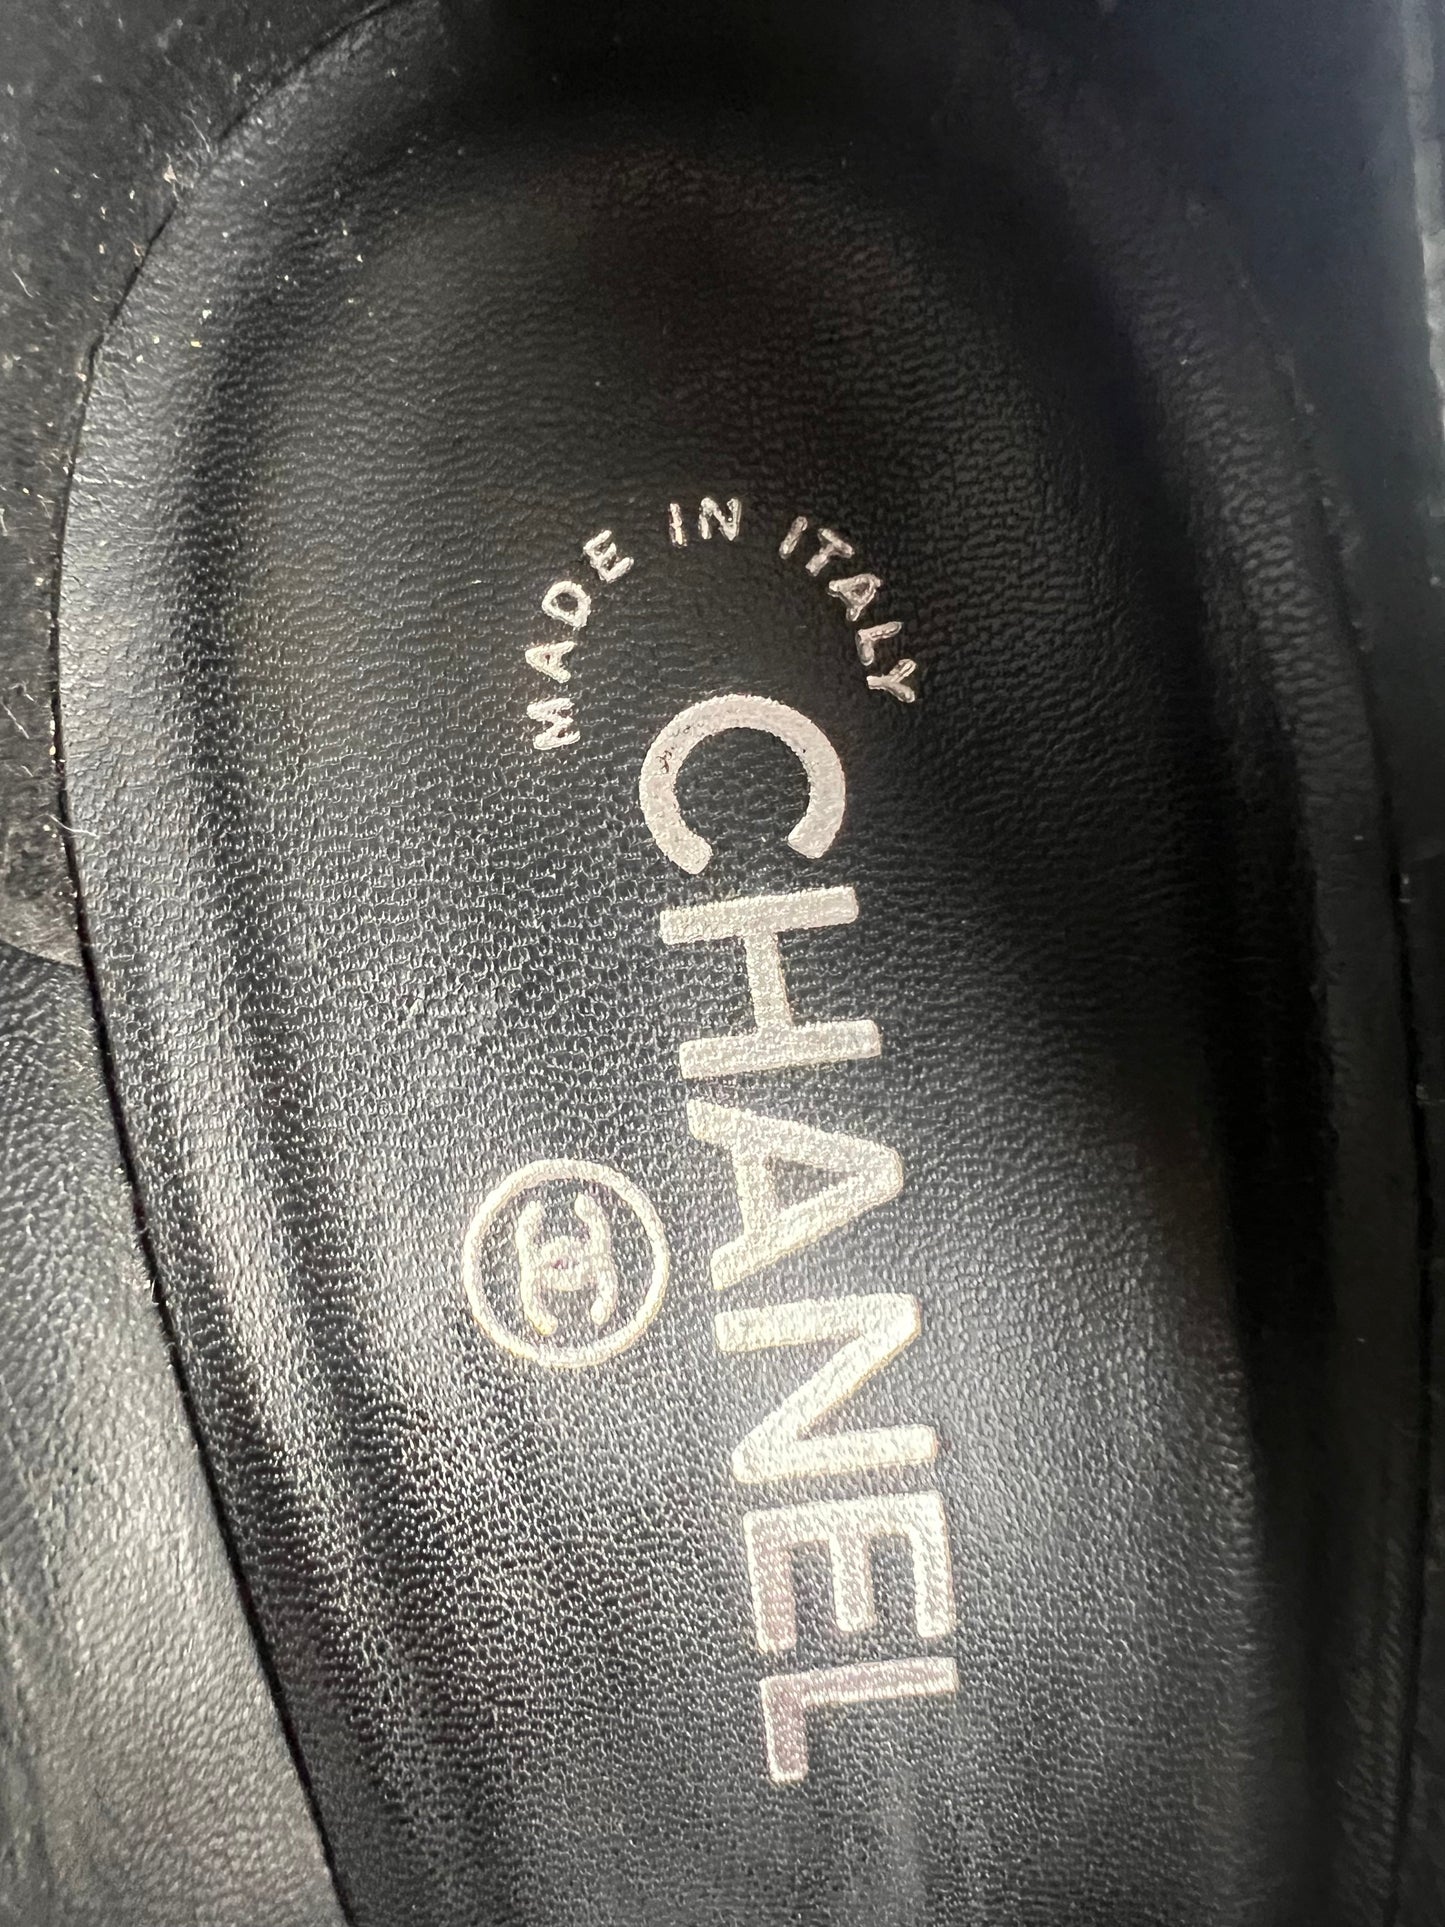 Chanel Black Patent Cap Toe Pump Size 41